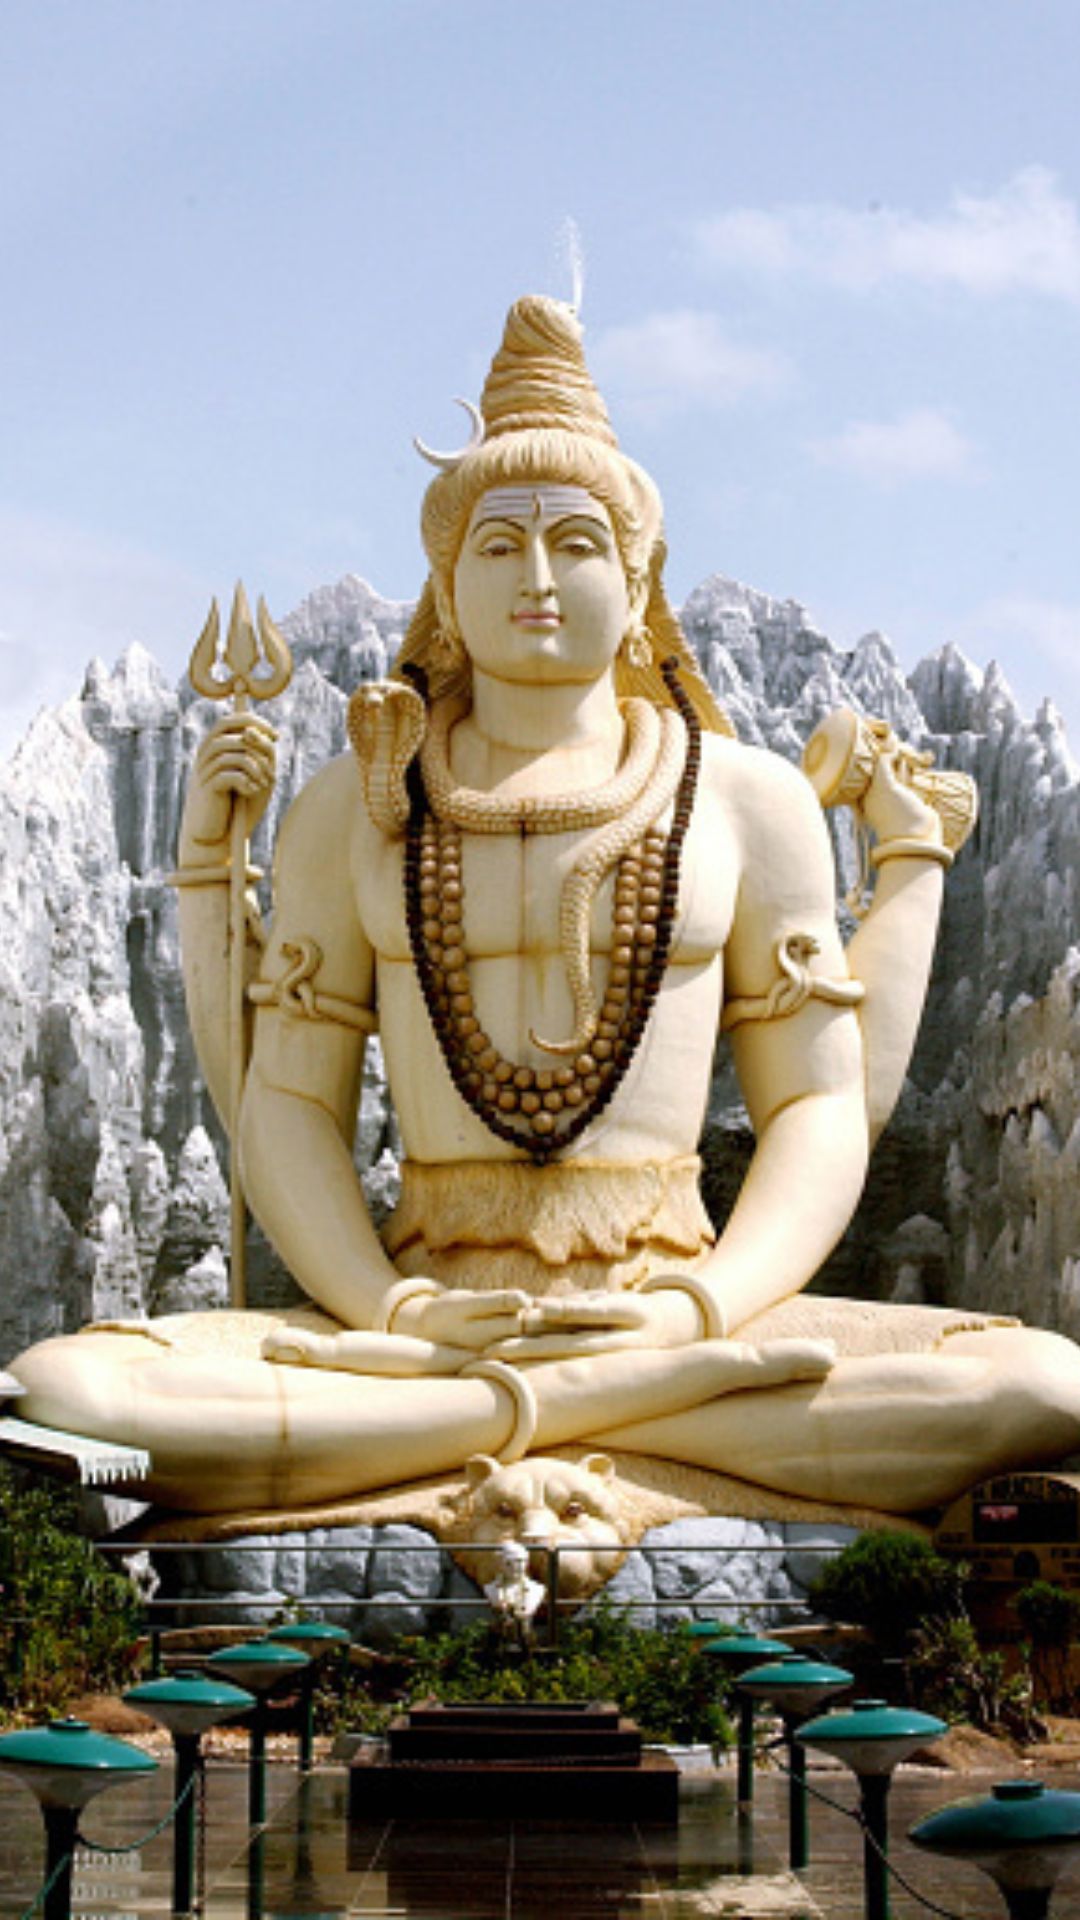 Popular Shiva Temples Of India To Explore